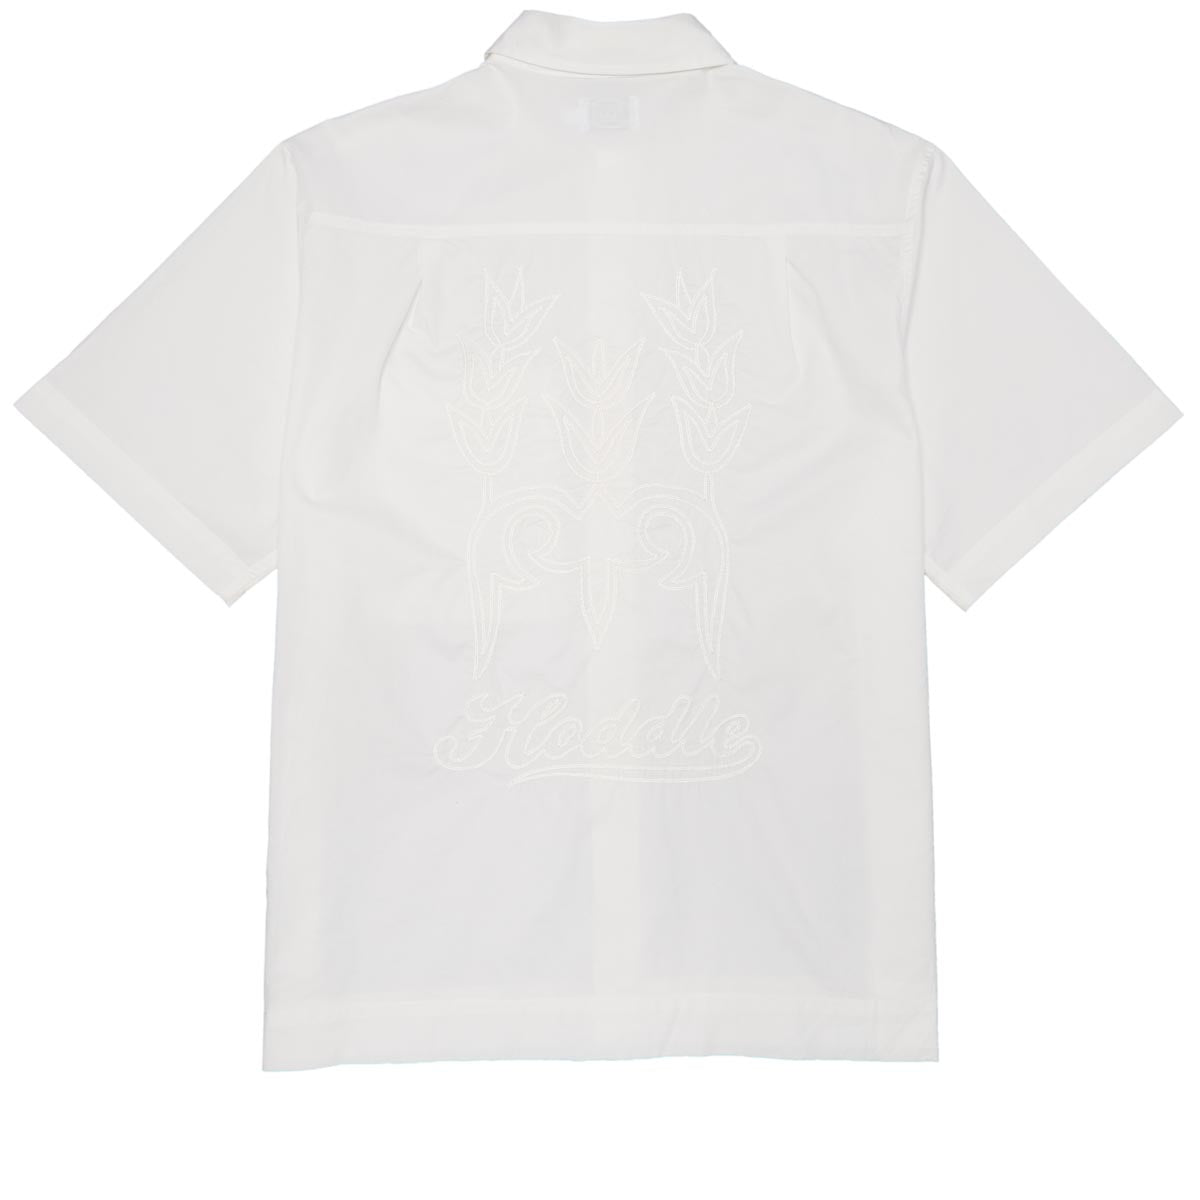 Hoddle Cheval Shirt - White image 2